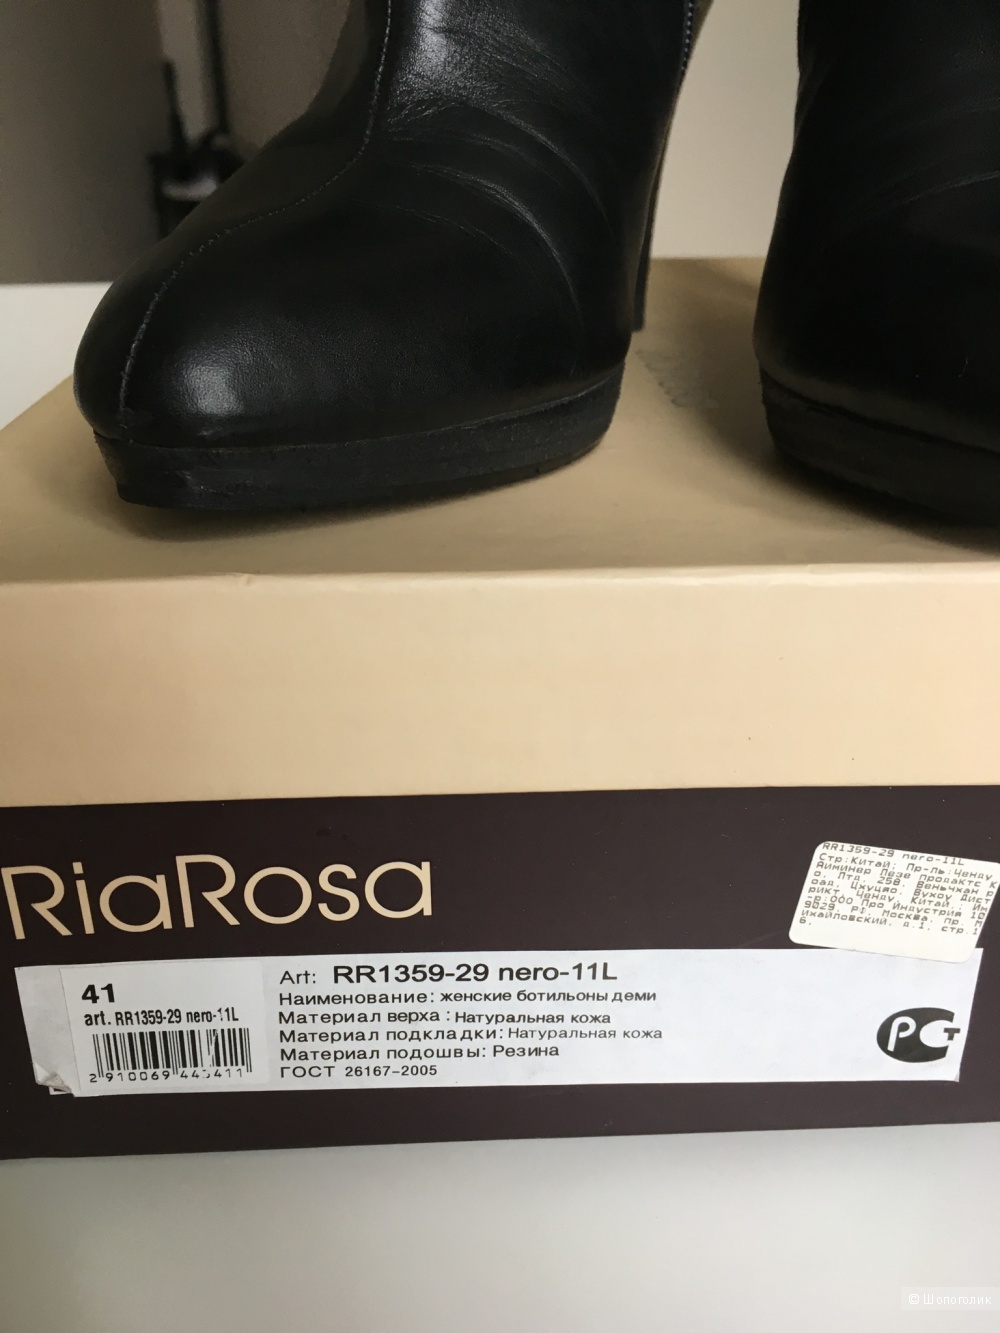 Riarosa обувь. Ботинки RIAROSA женские. Ботильоны Эконика текстильные. Ботильоны RIAROSA.